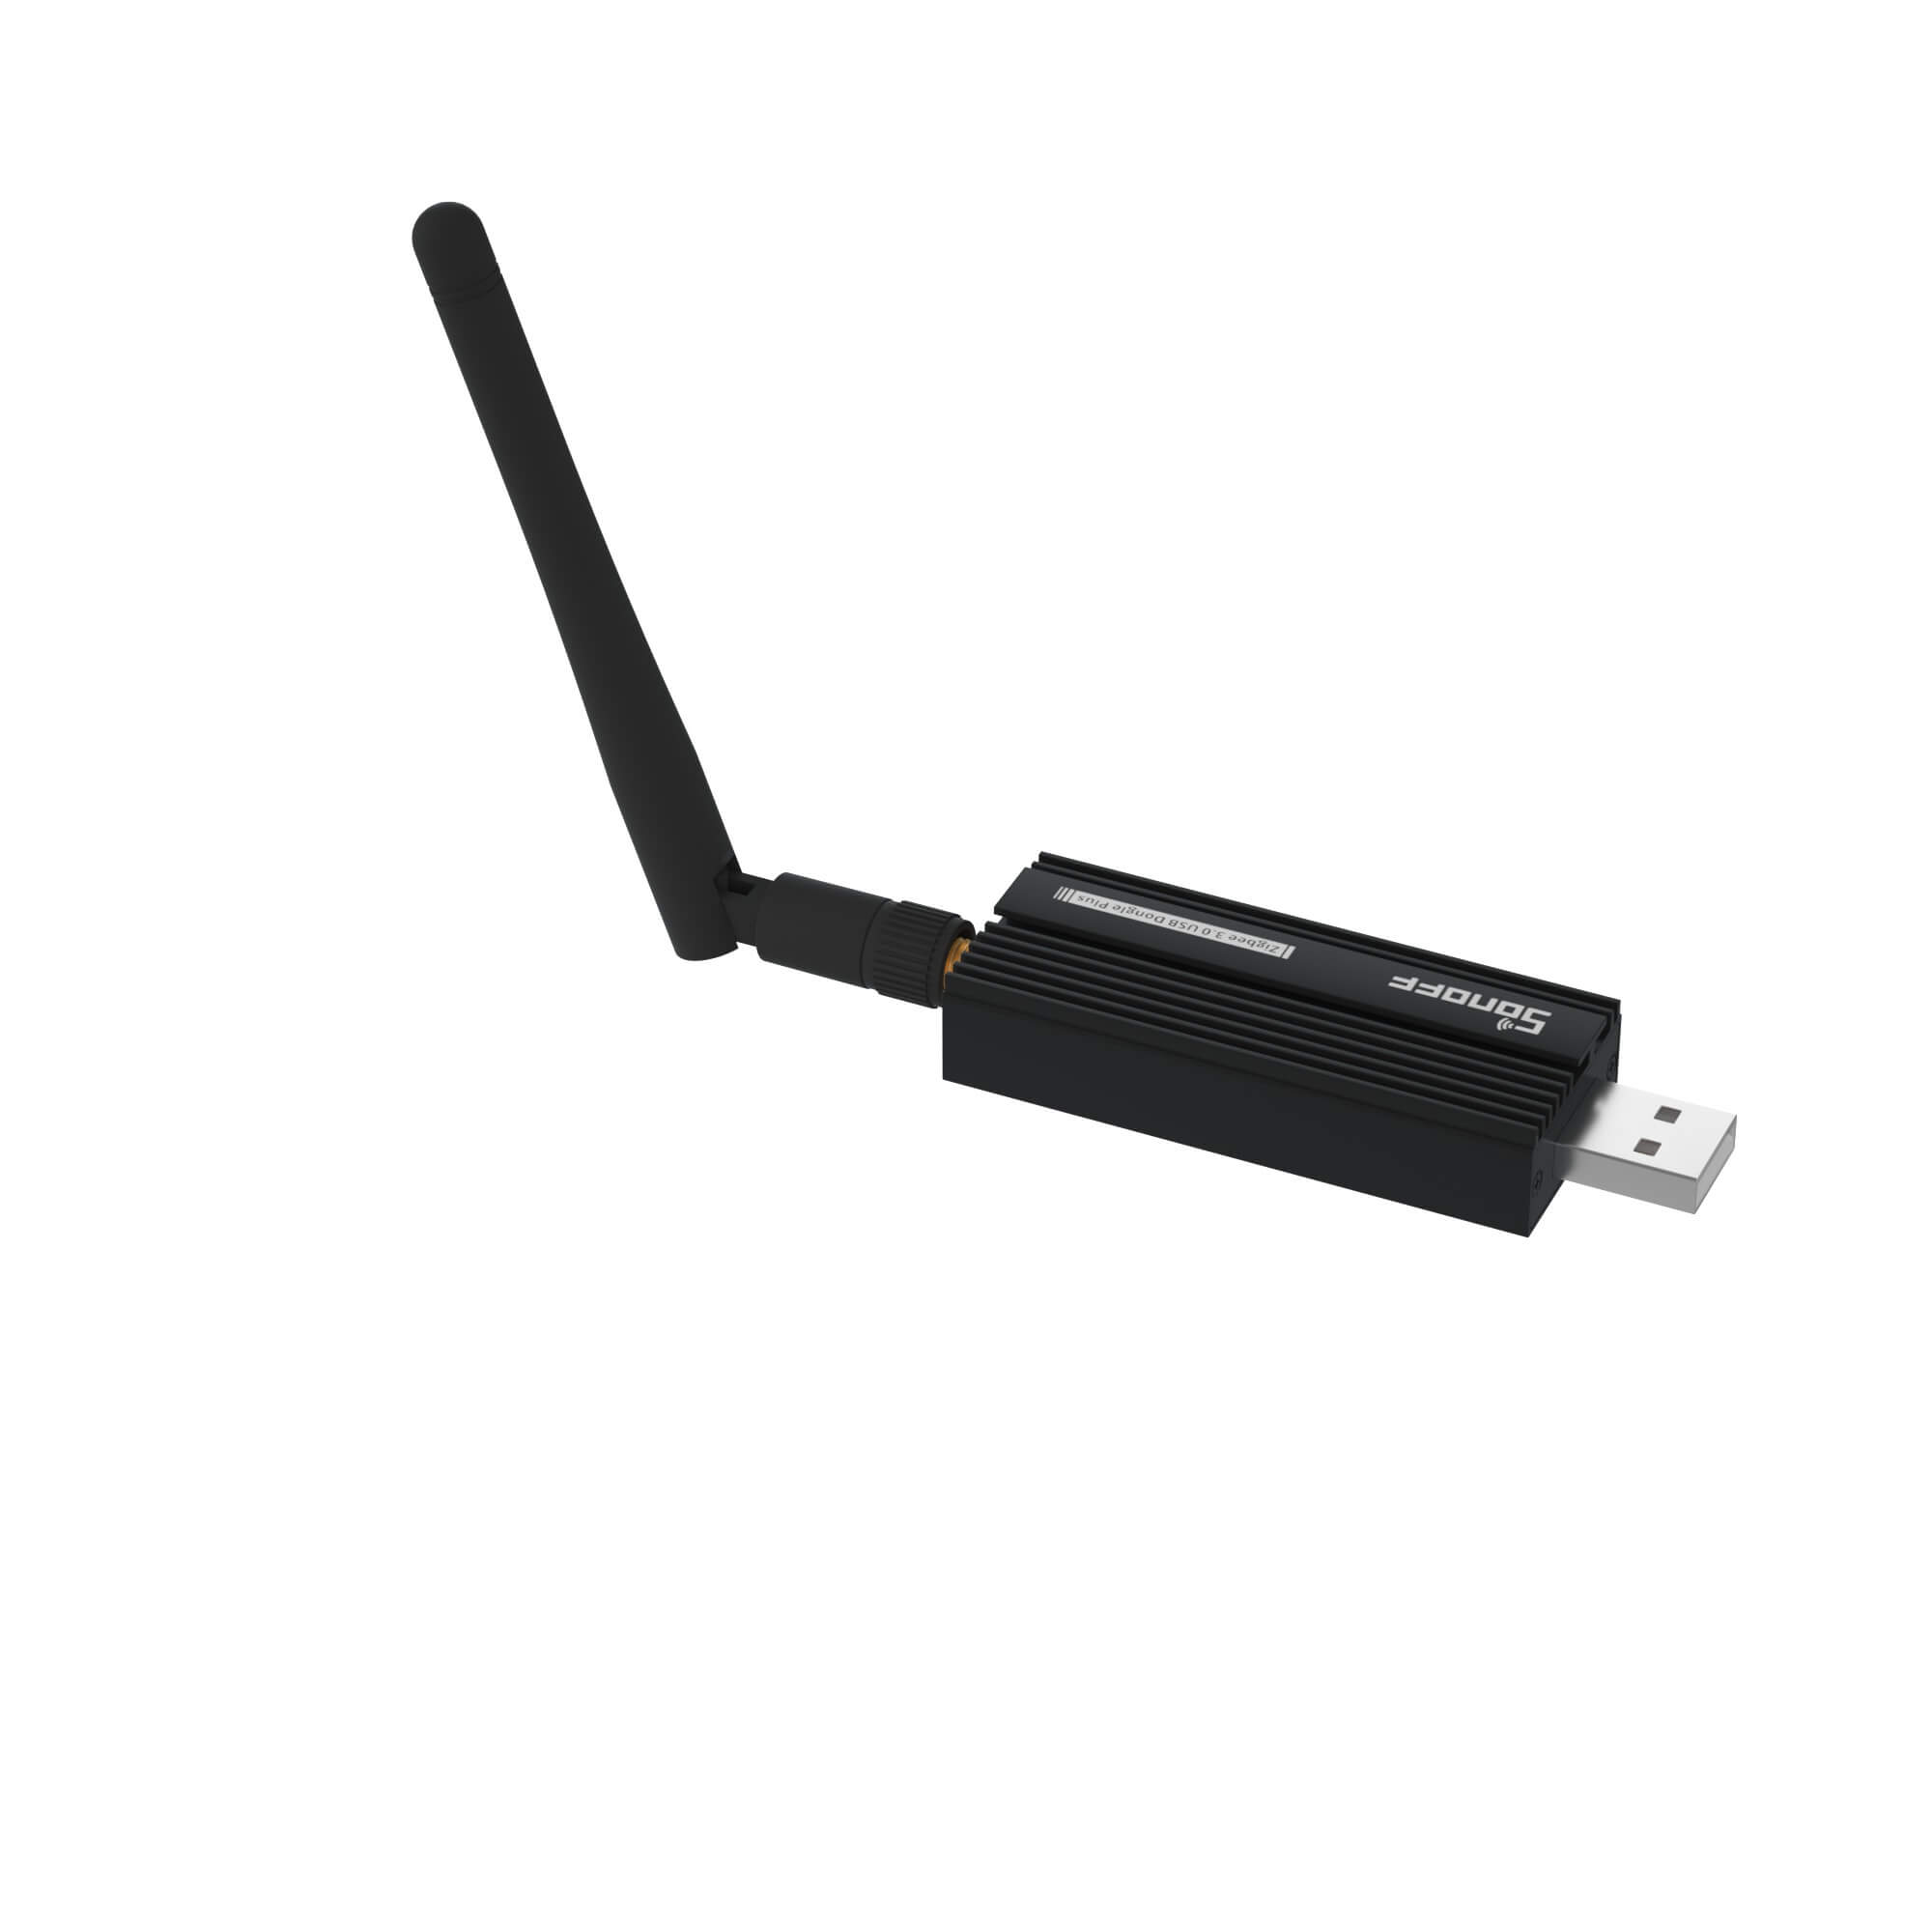 SONOFF Zigbee 3.0 USB Dongle Plus Gateway, Universal Zigbee USB Gateway  with Antenna for Home Assistant, IoBroker, Wireless Zigbee 3.0 USB  Adapter(1